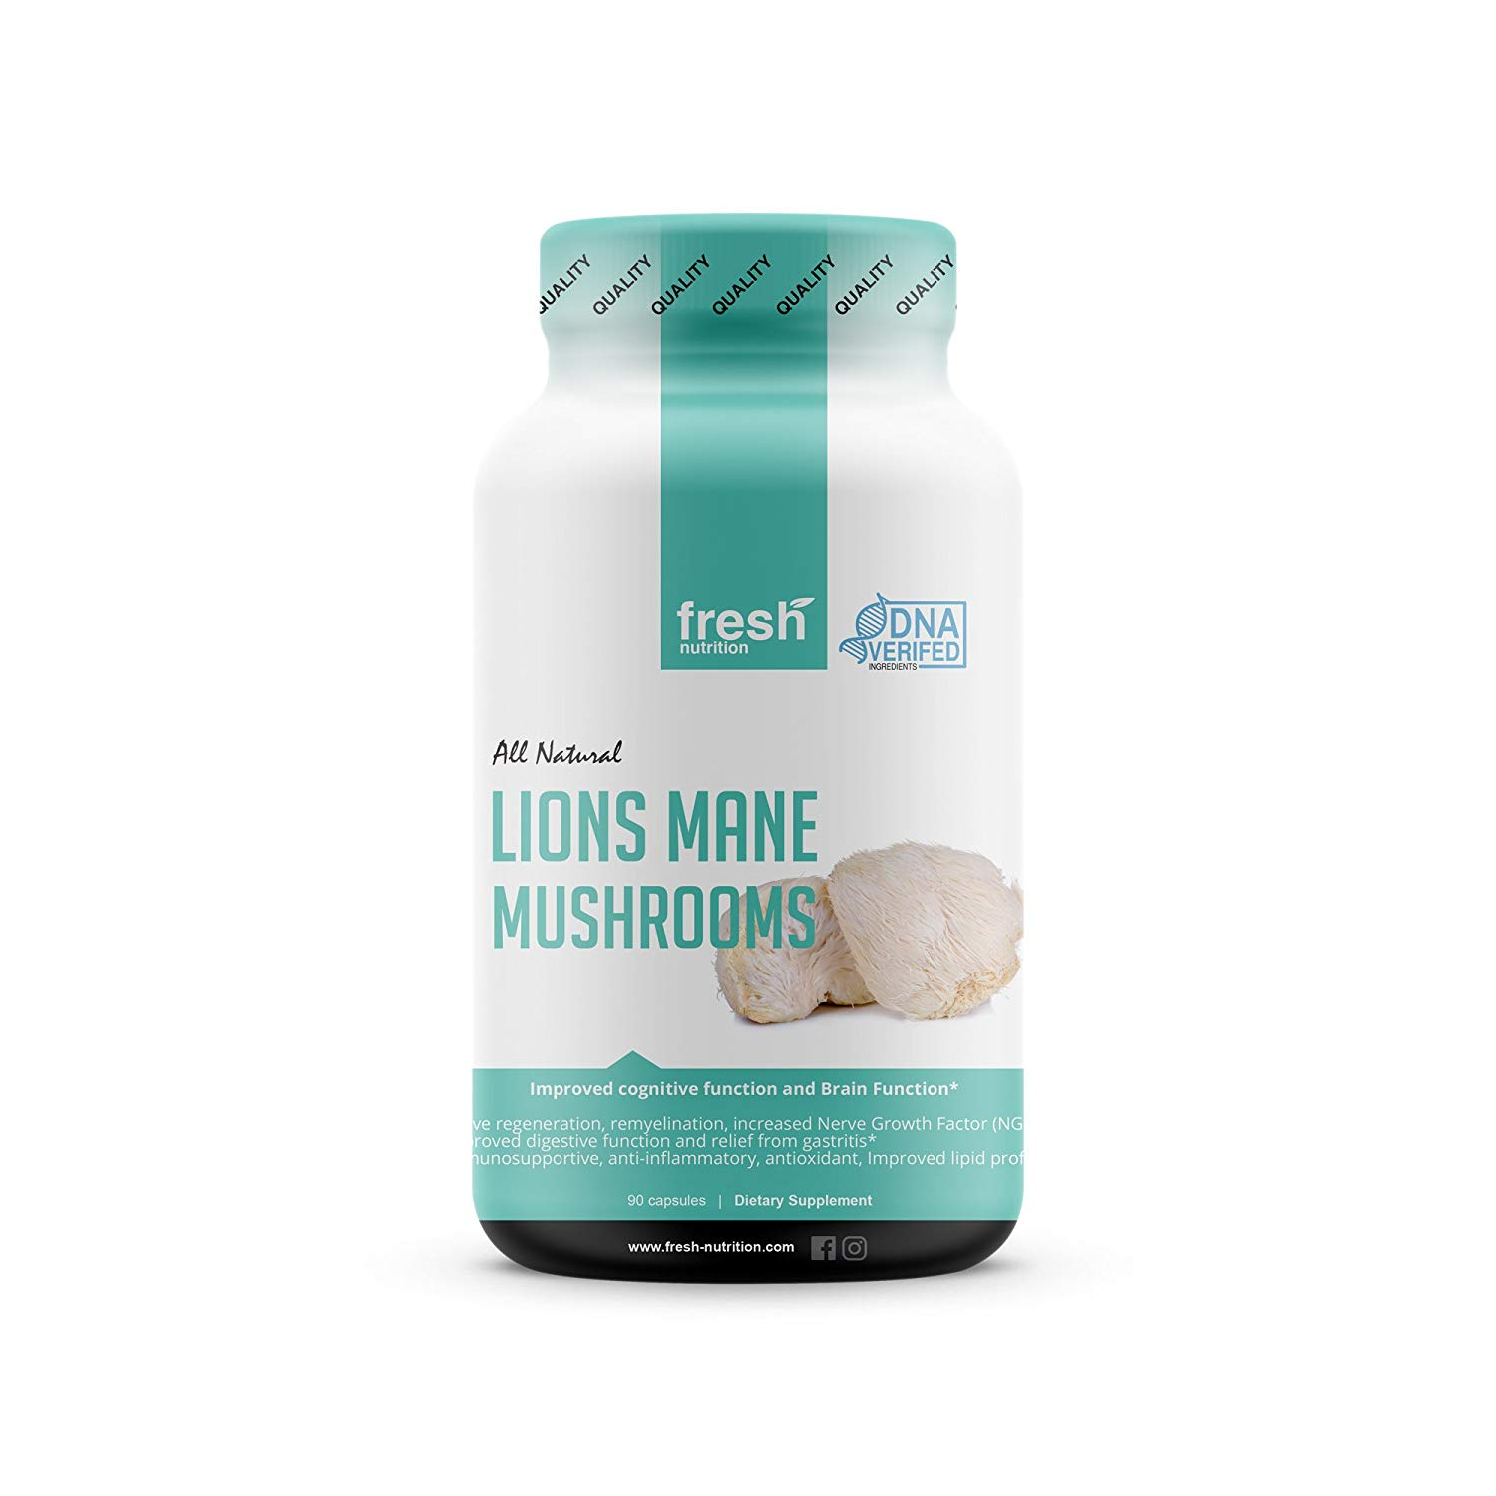 Fresh Nutrtion 라이온스 갈기 버섯(Lions Mane Mushrooms)영양제 캡슐 강력한 1500mg 특별 할인 가격 - 유기농 파우더 비건 친화적 보충제 뇌 신경 및 면역 시스템 기능 장점 슈퍼푸드 NON GMO, 1통 